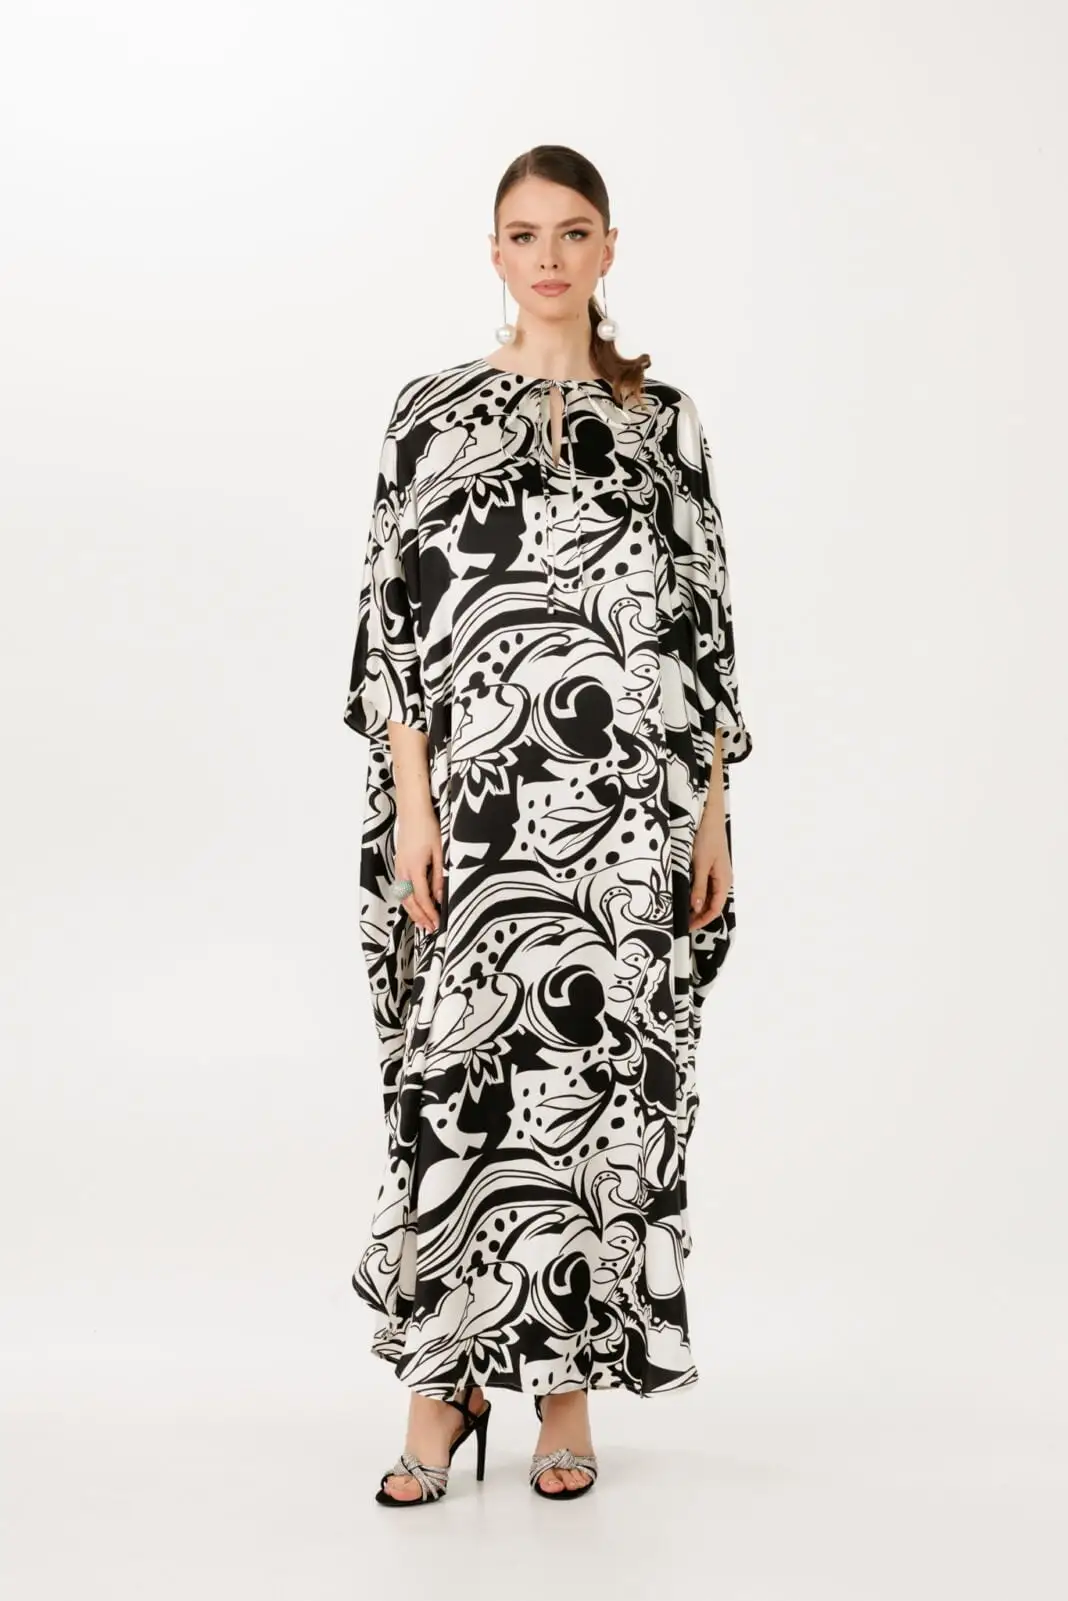 Luxurious maxi black and white kaftan dress for women by house of azoiia